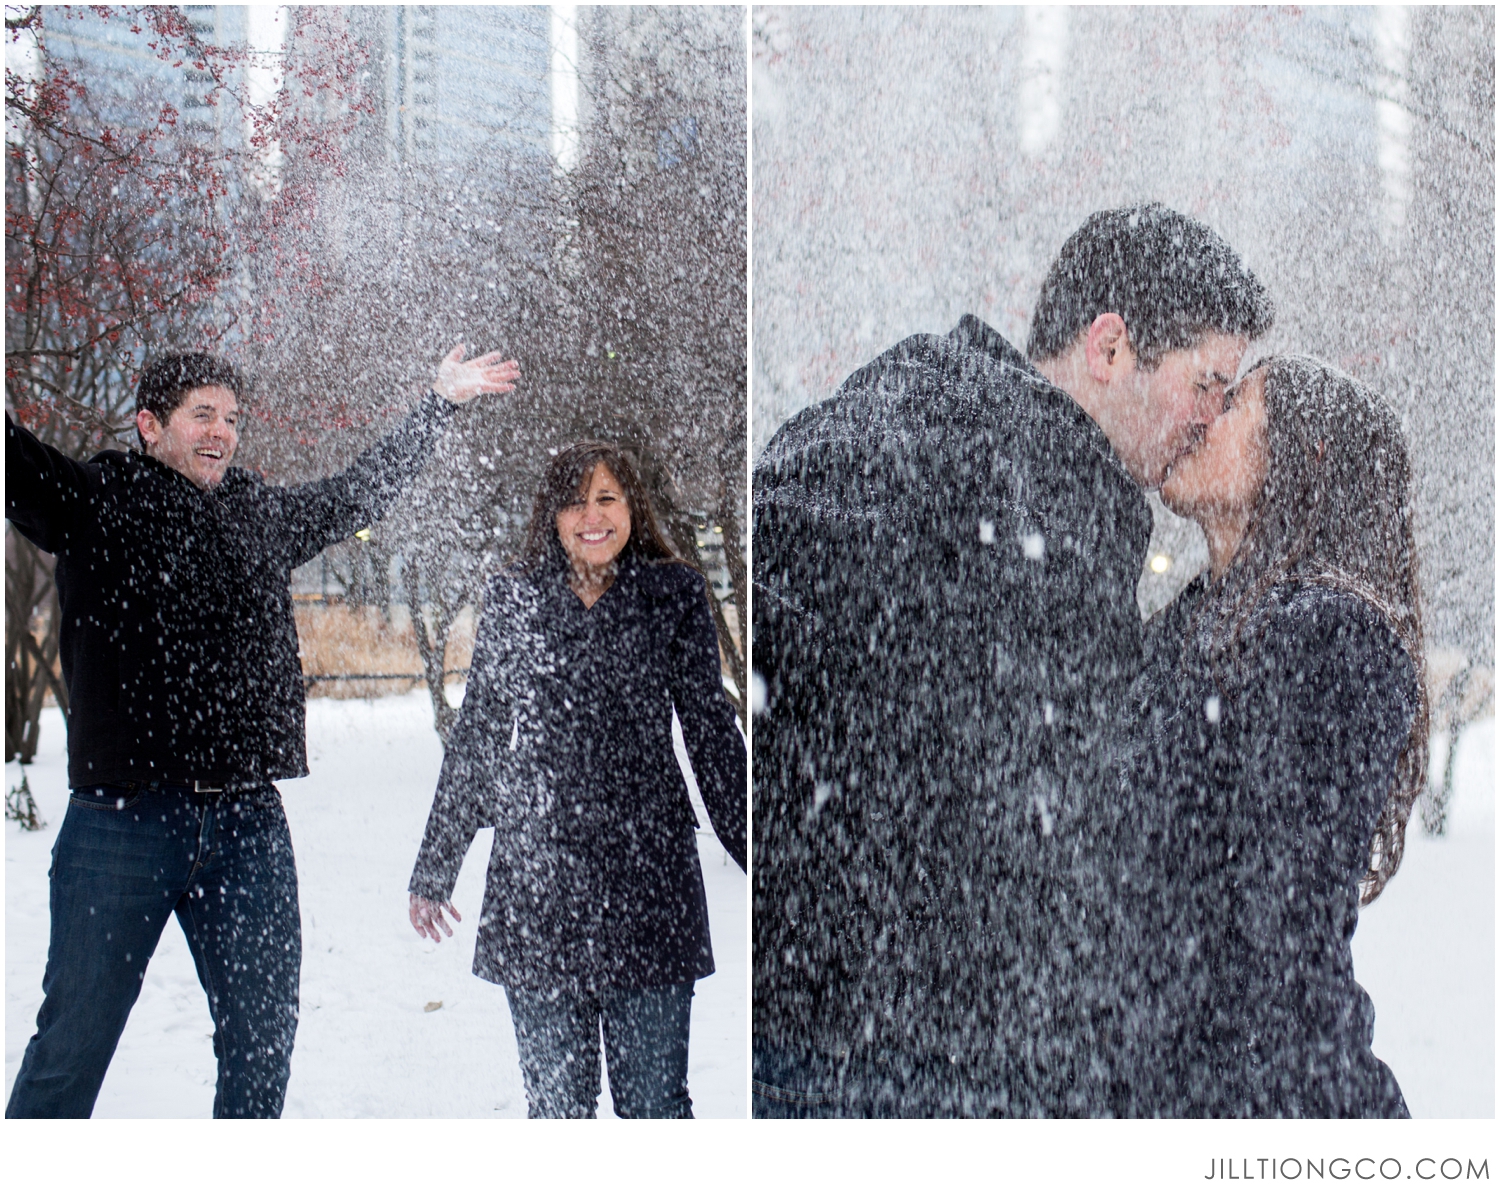 Olive Park Engagement Photos | Chicago Wedding Photographer | Jill Tiongco Photography 